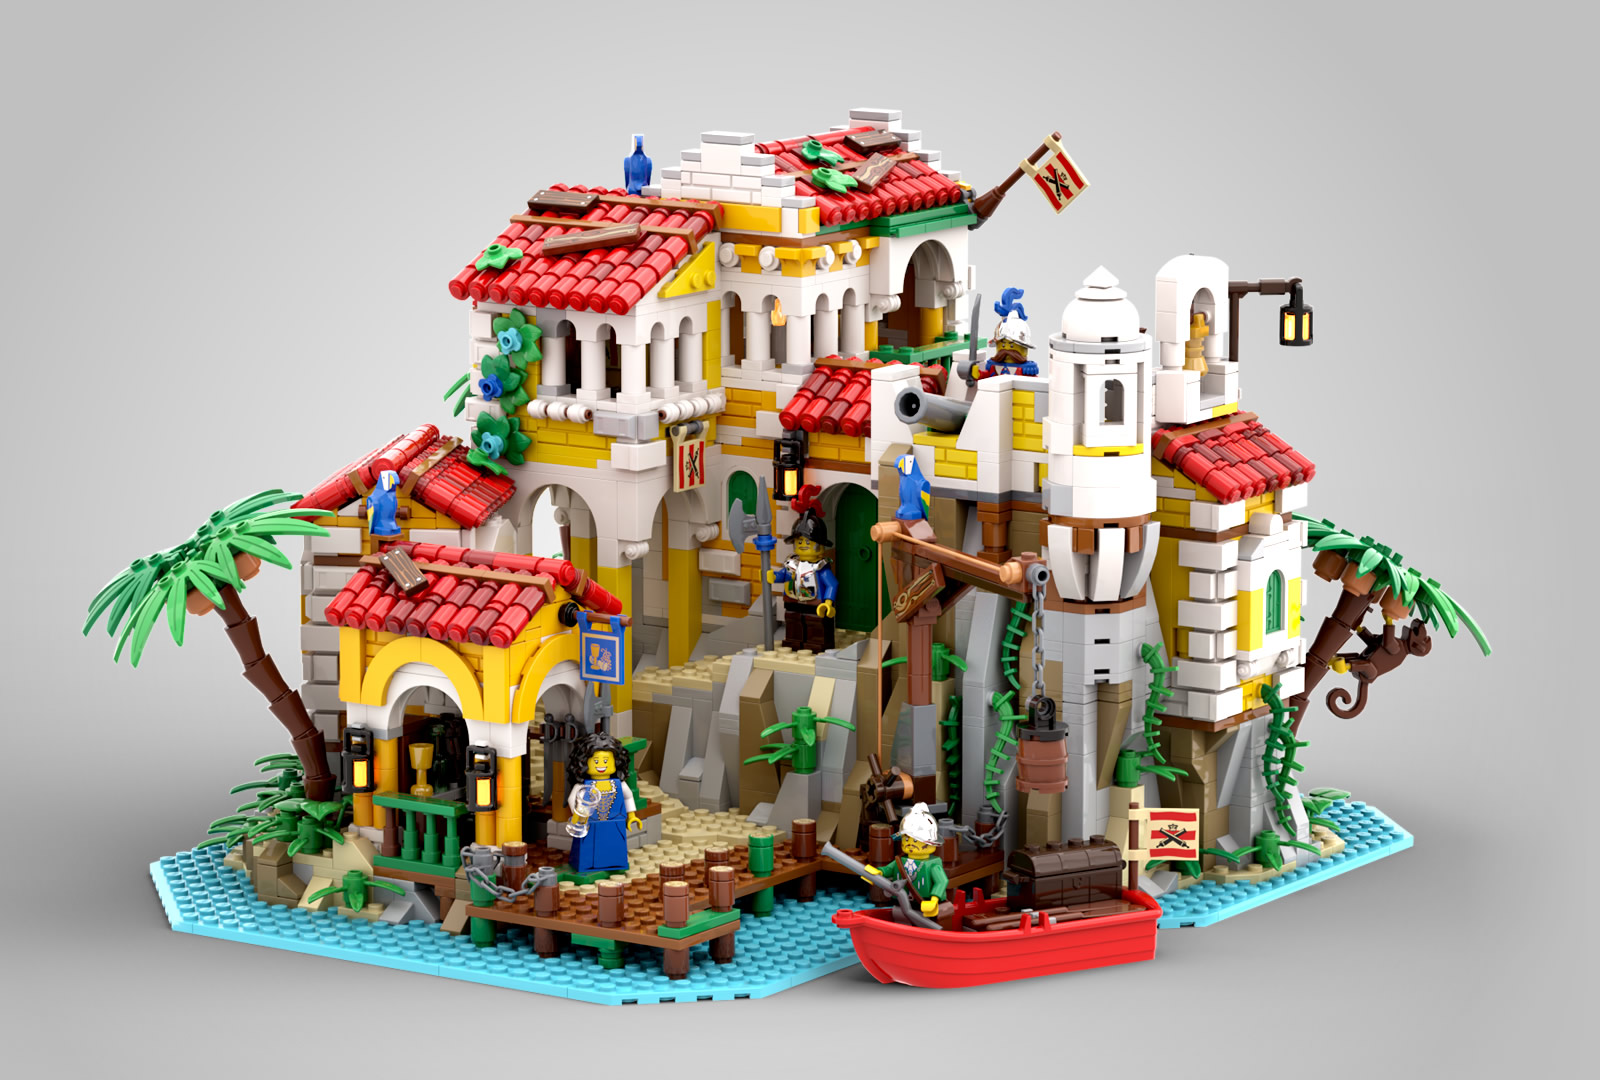 Armada Port” by BrickHammer – LEGO Ideas Team Review Results